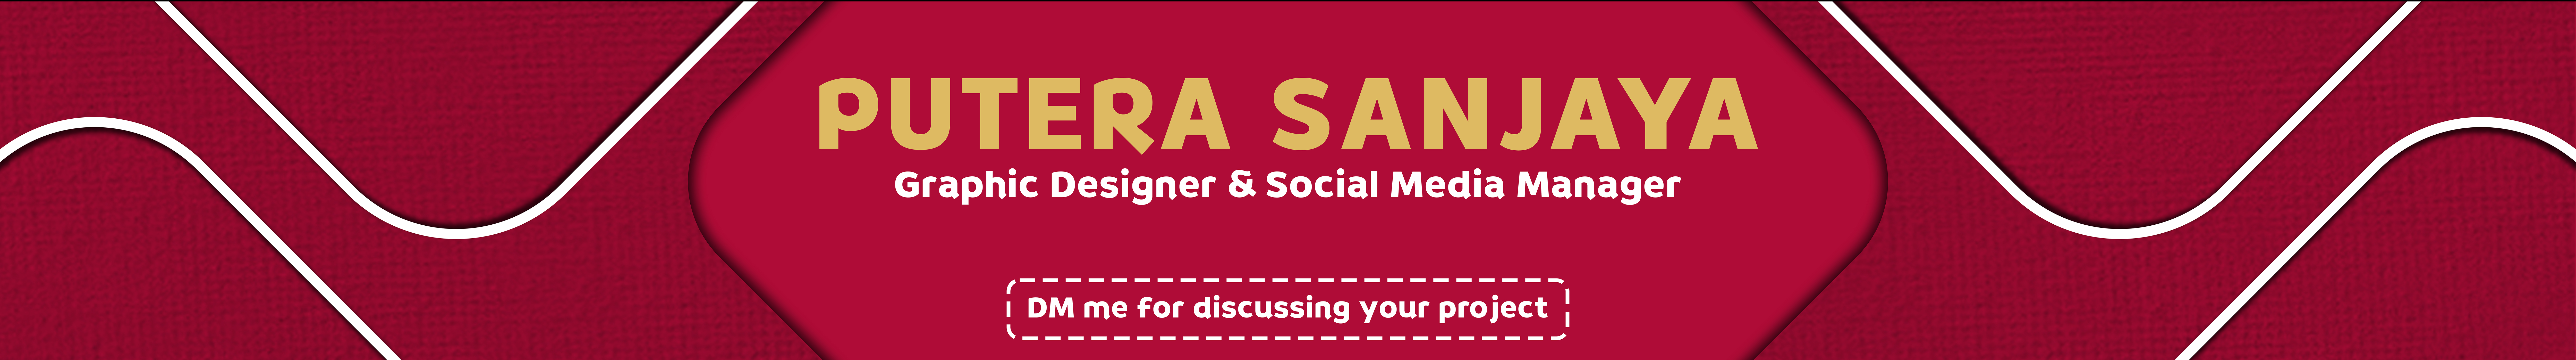 Putera Sanjaya | My Profile Your Inspirations's profile banner